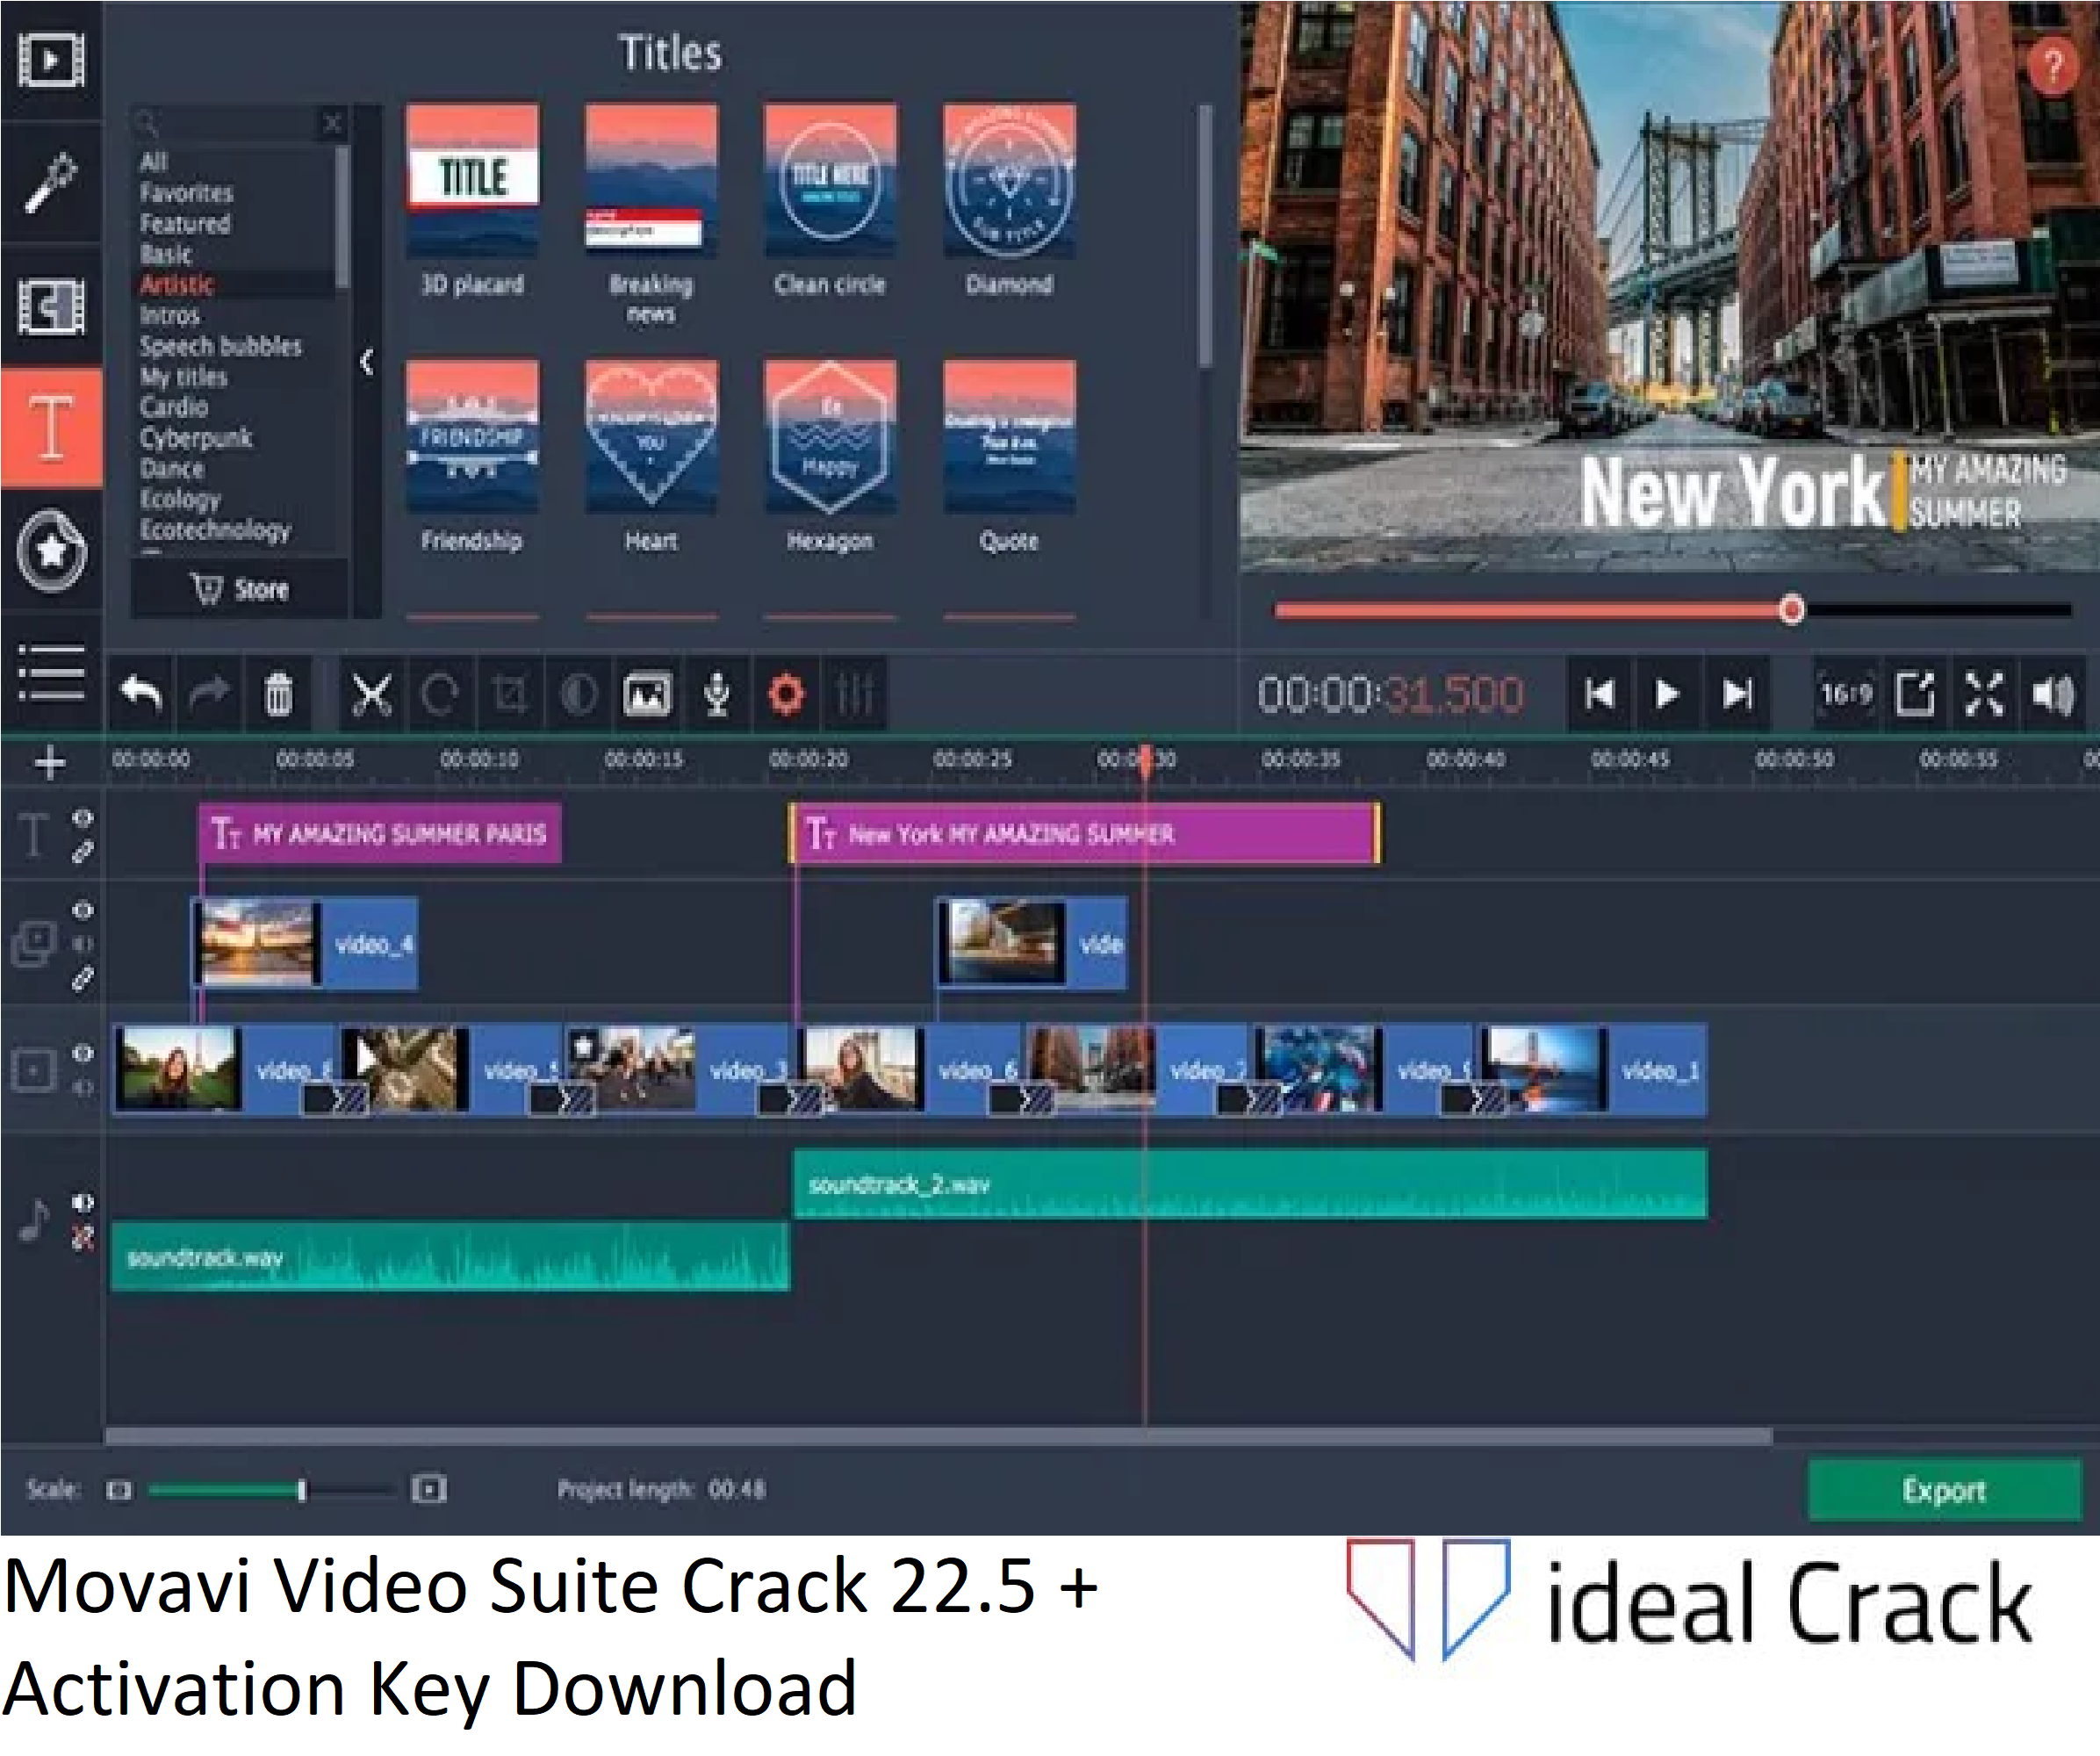 Movavi Video Suite Crack 22.5 + Activation Key Download